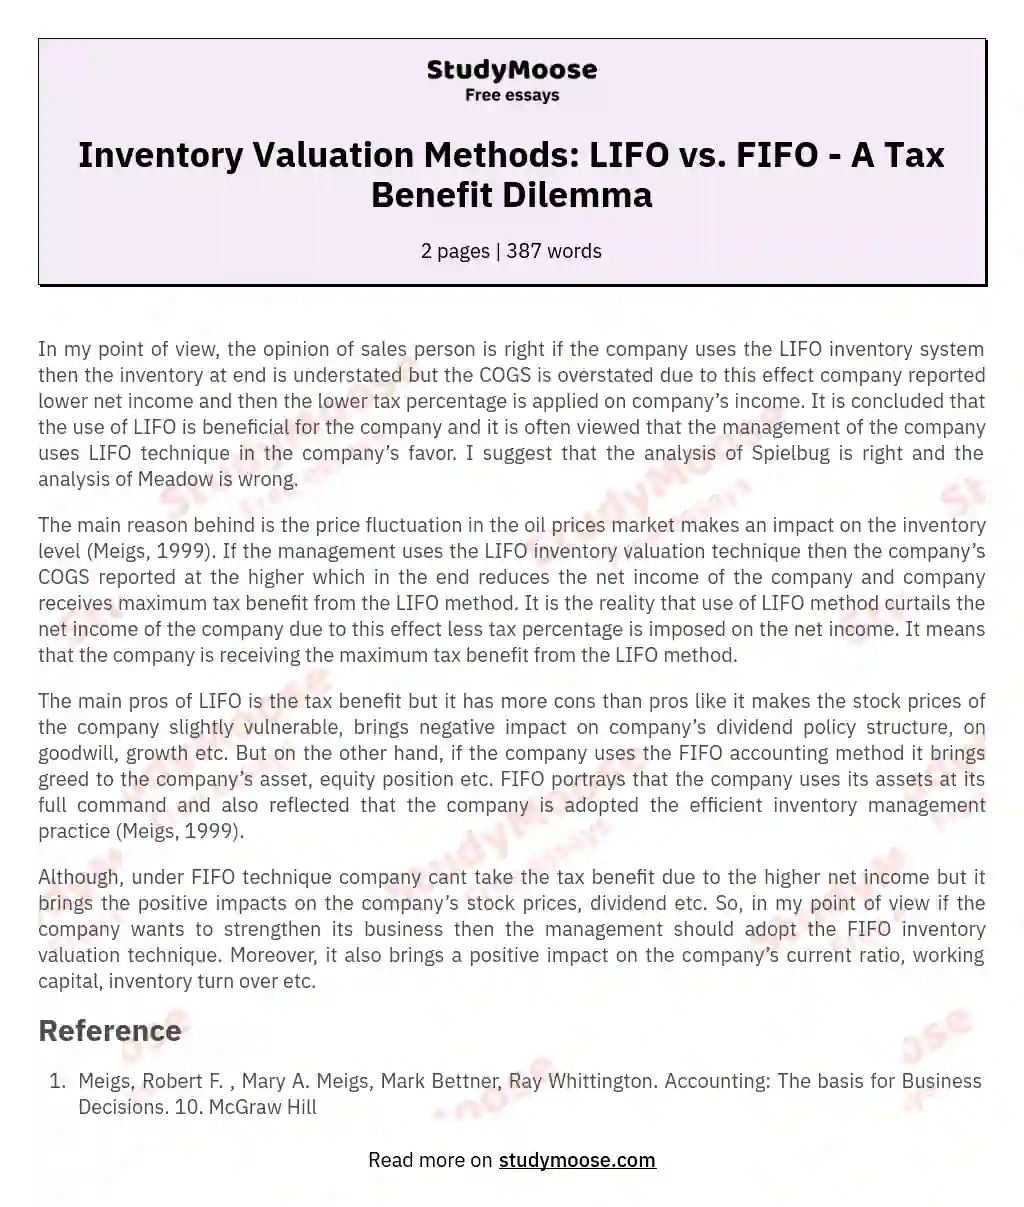 Inventory Valuation Methods: LIFO vs. FIFO - A Tax Benefit Dilemma essay